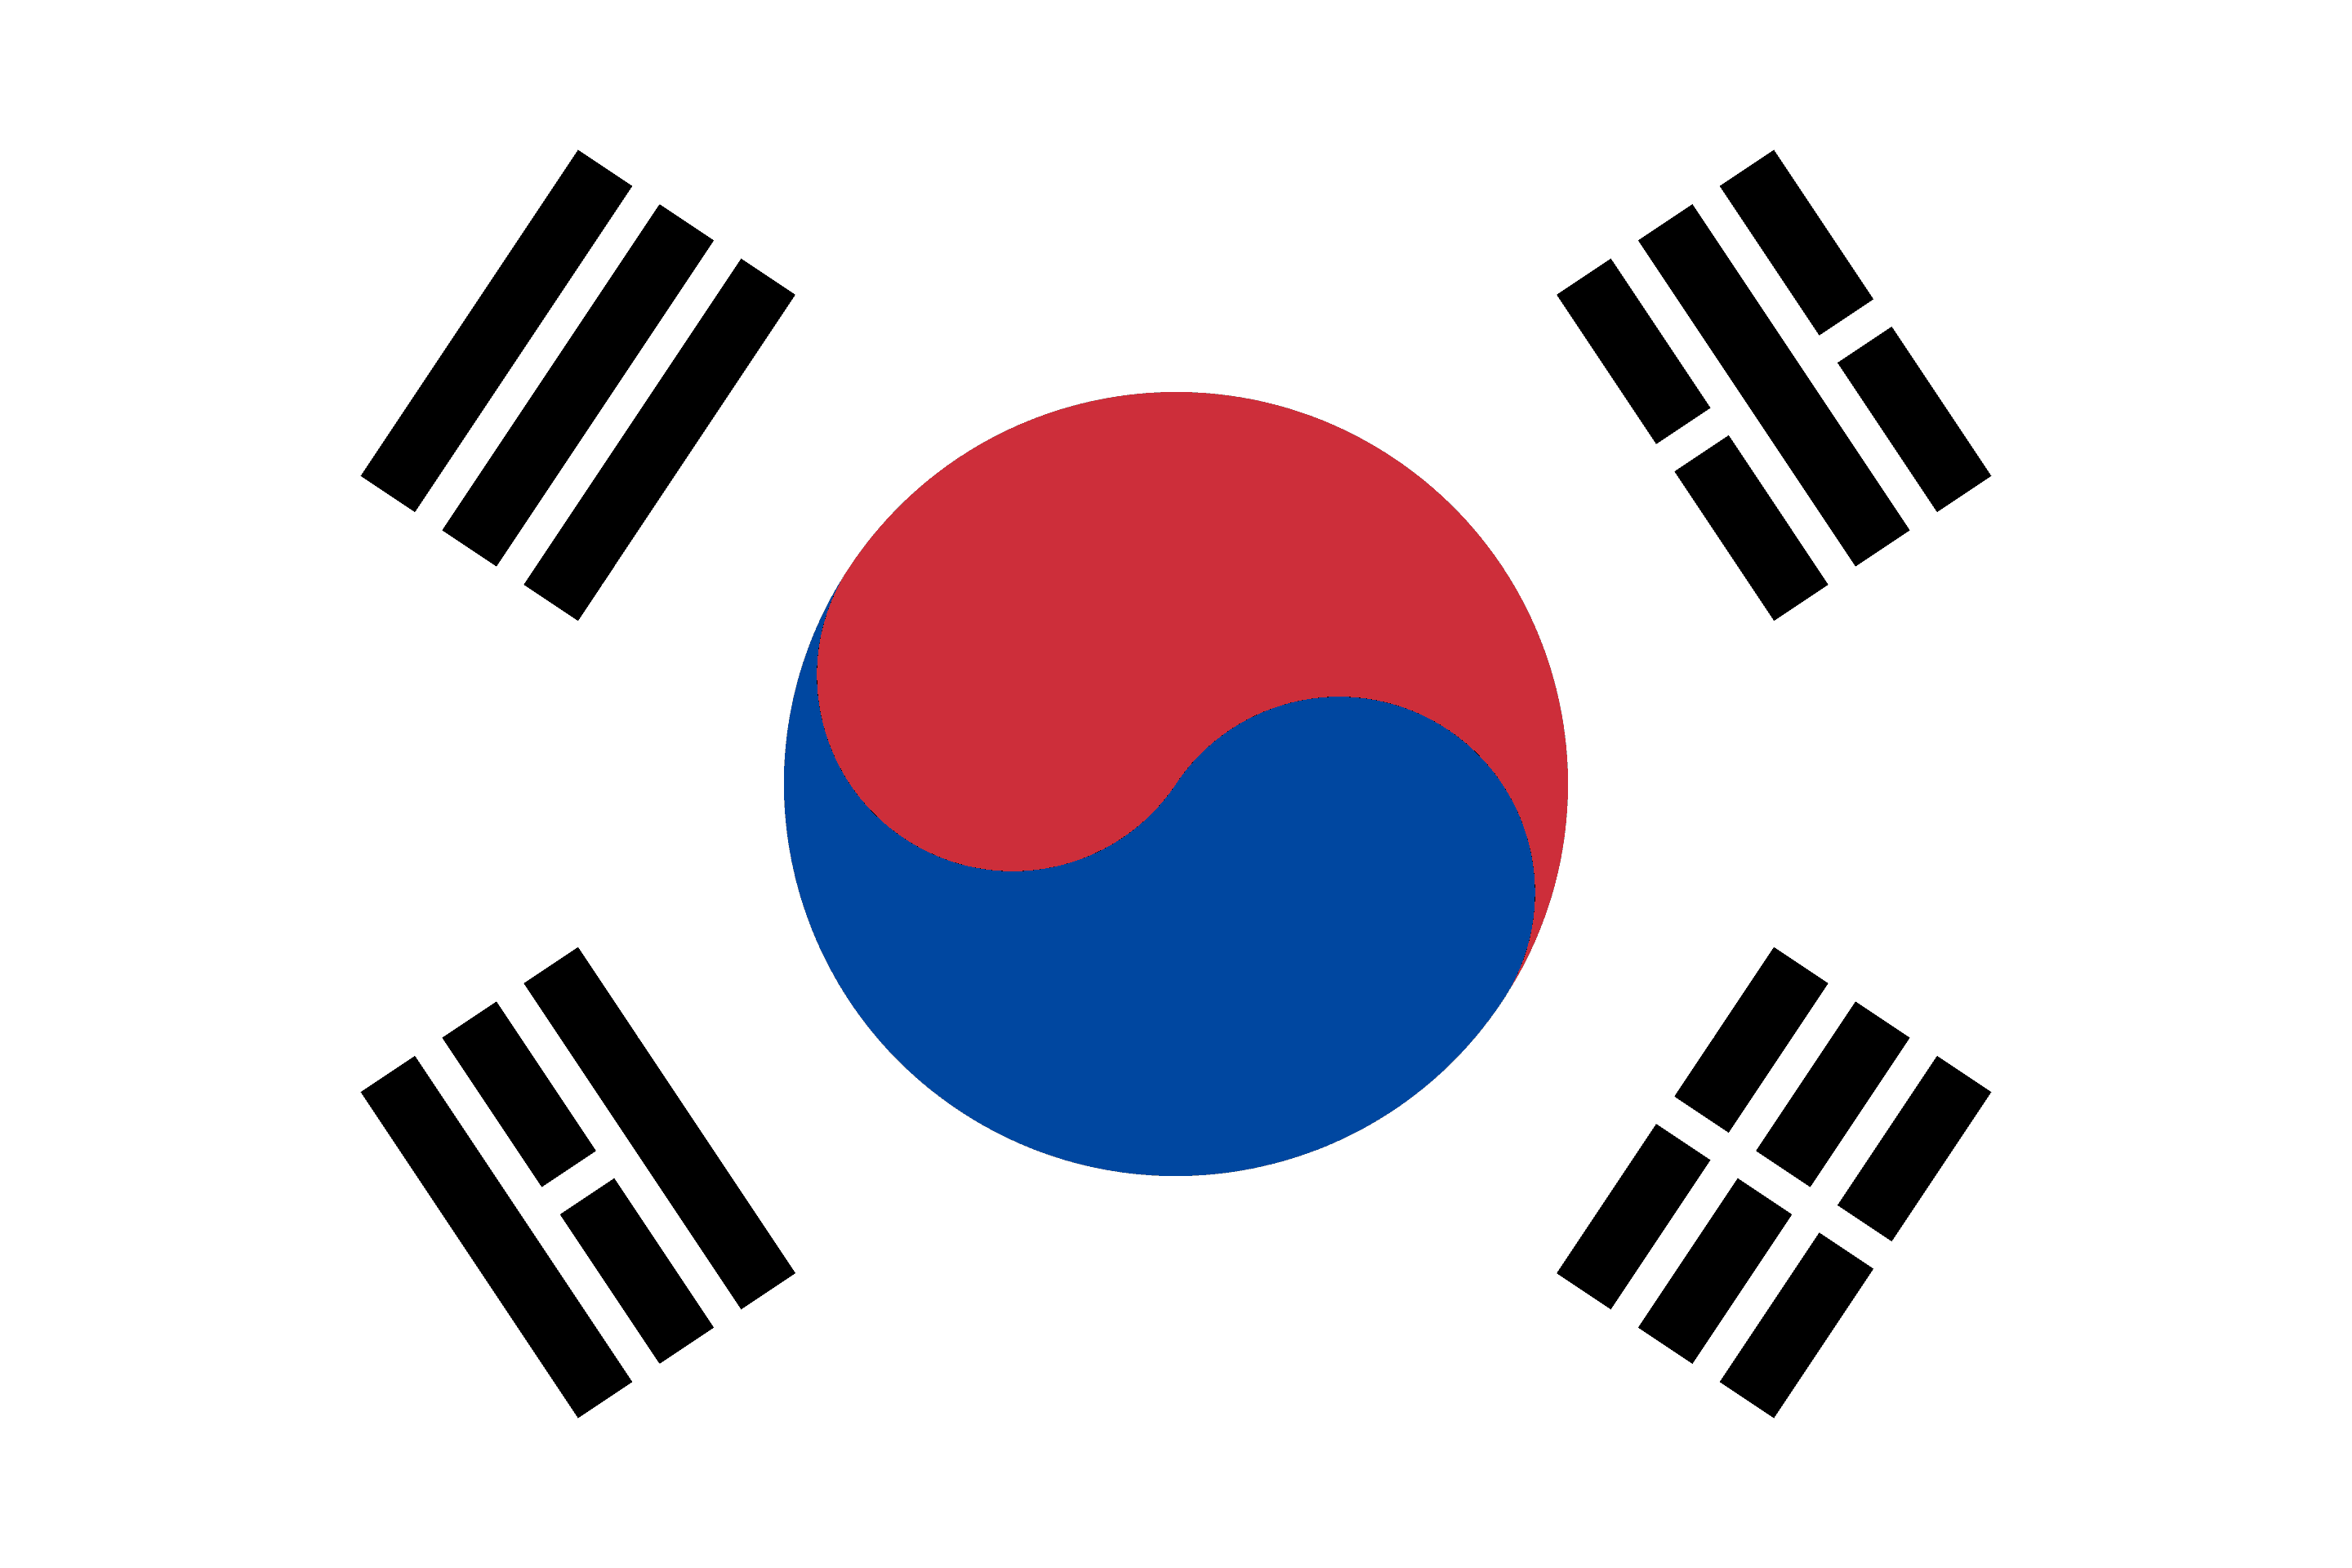 South Kore Flag - Republic of Korea Drone Laws